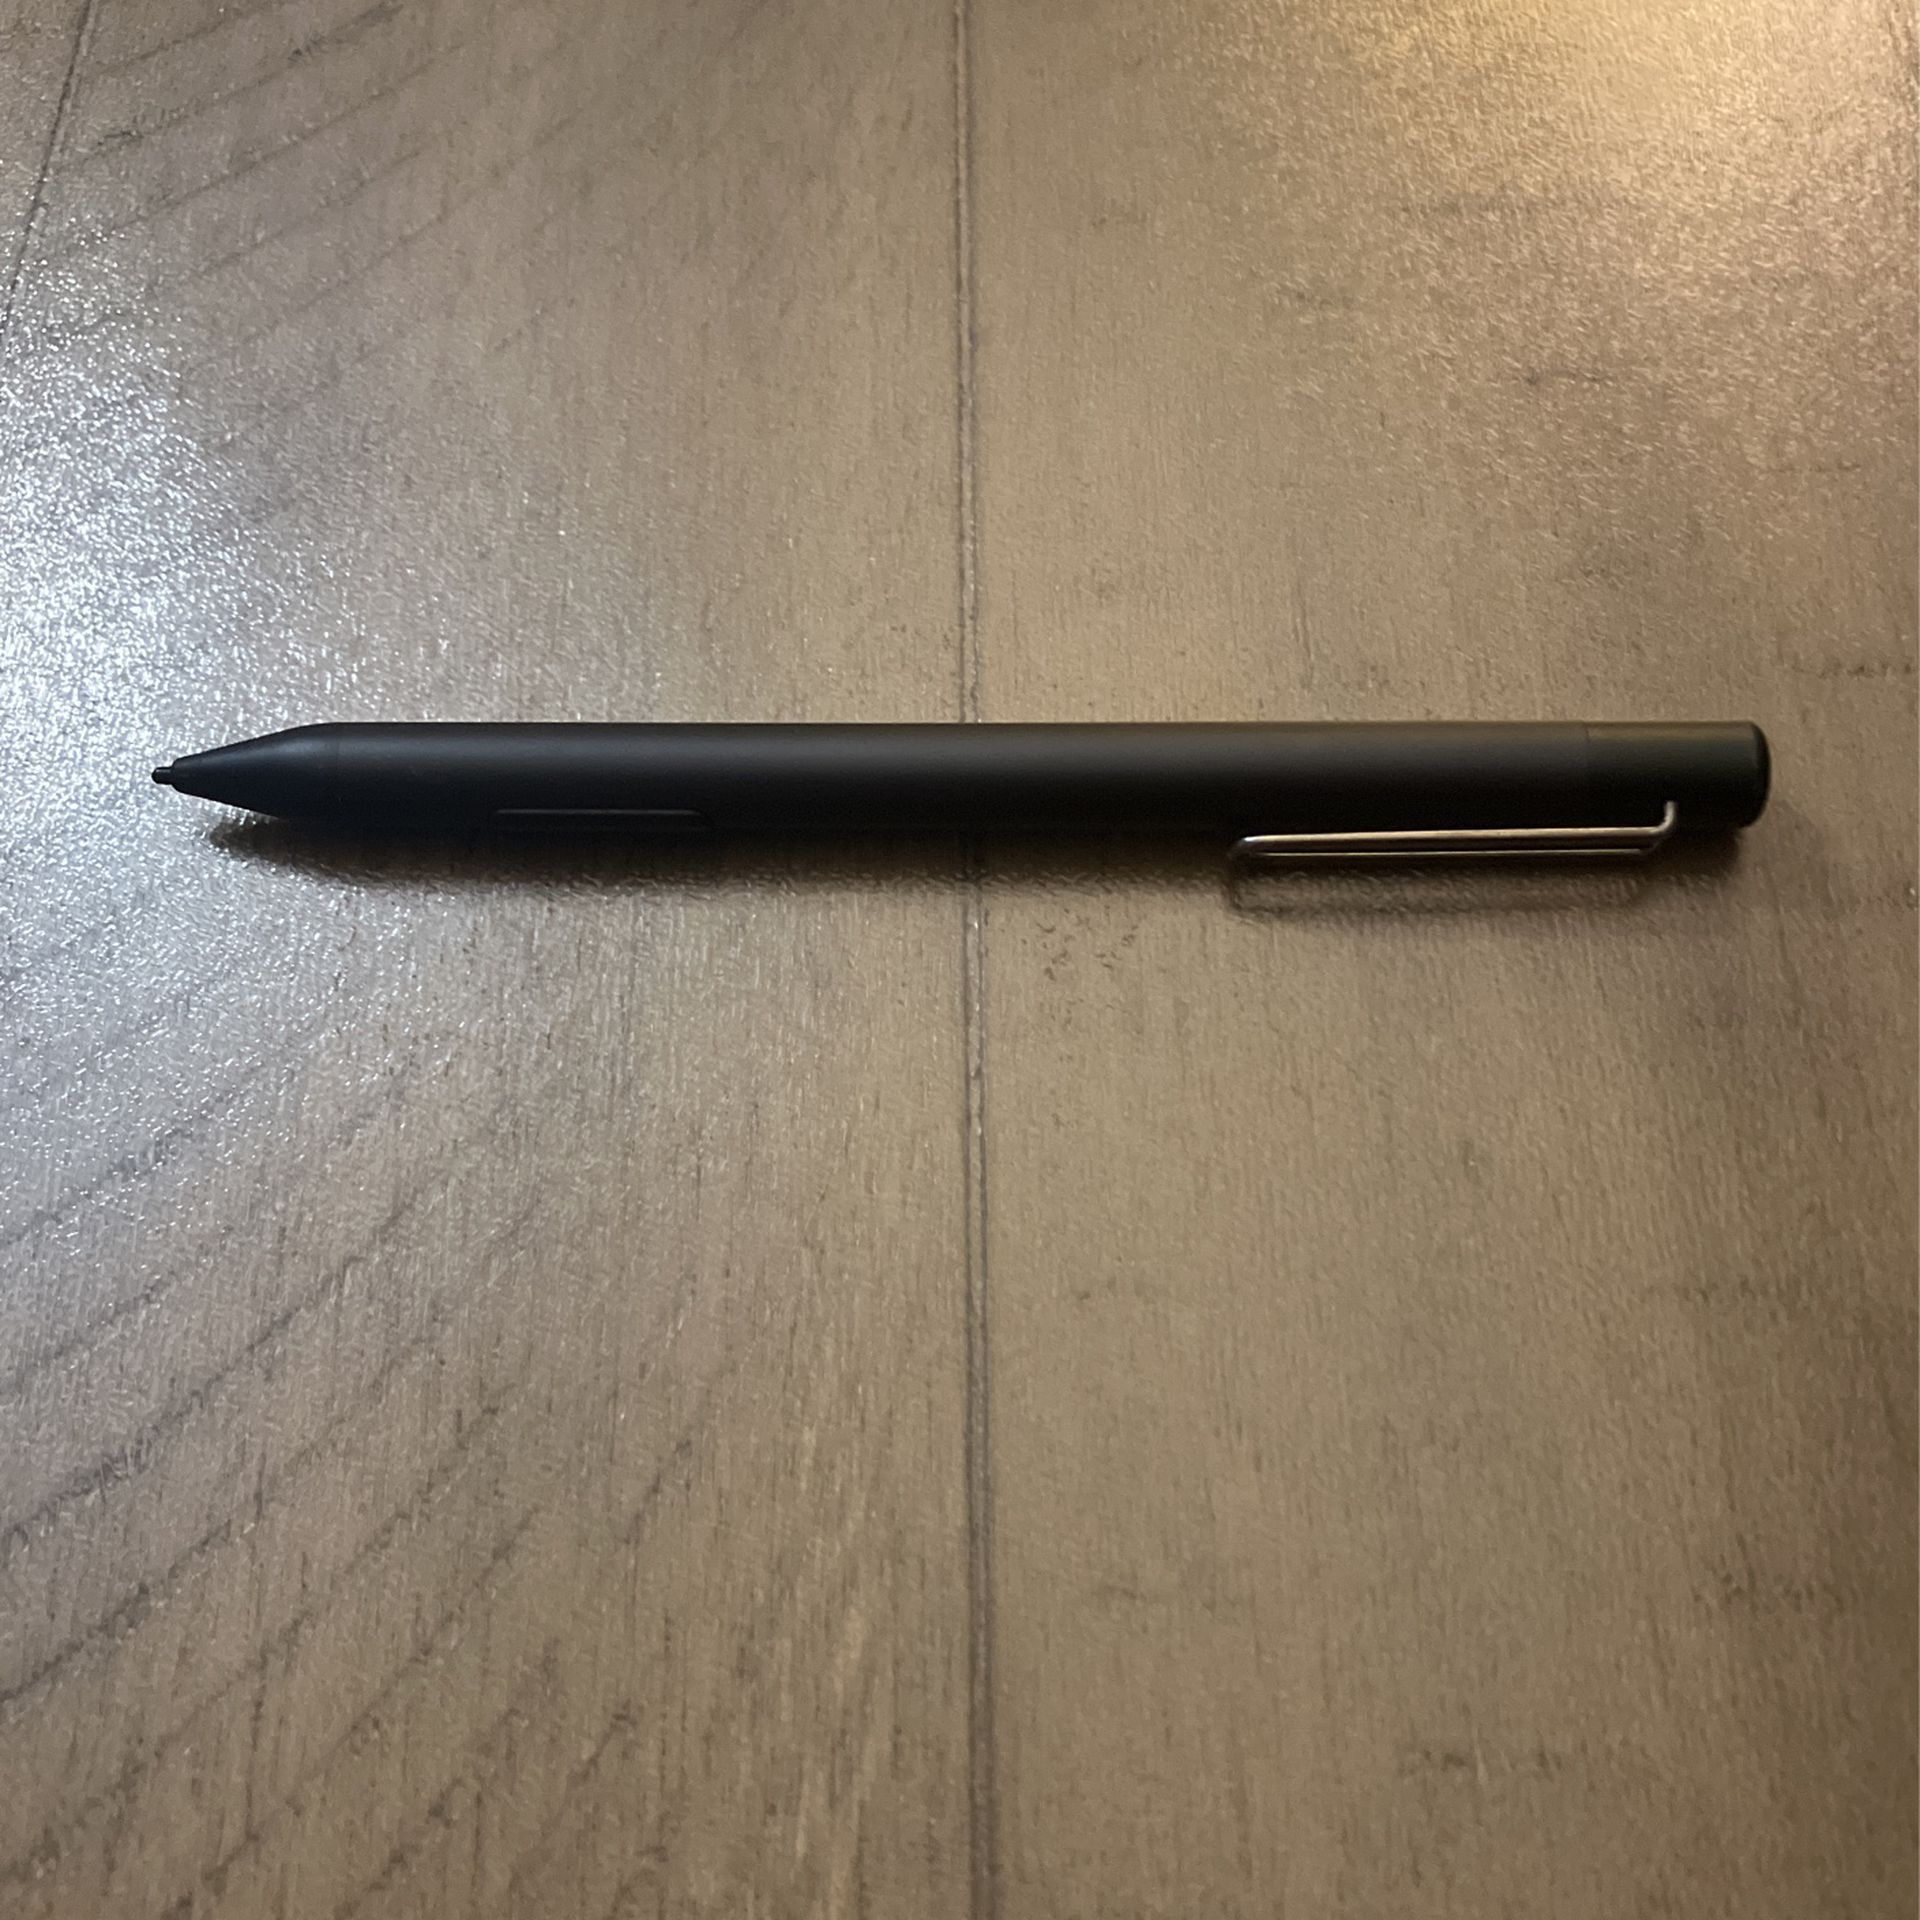 Black Stylus Pen For Microsoft Surface